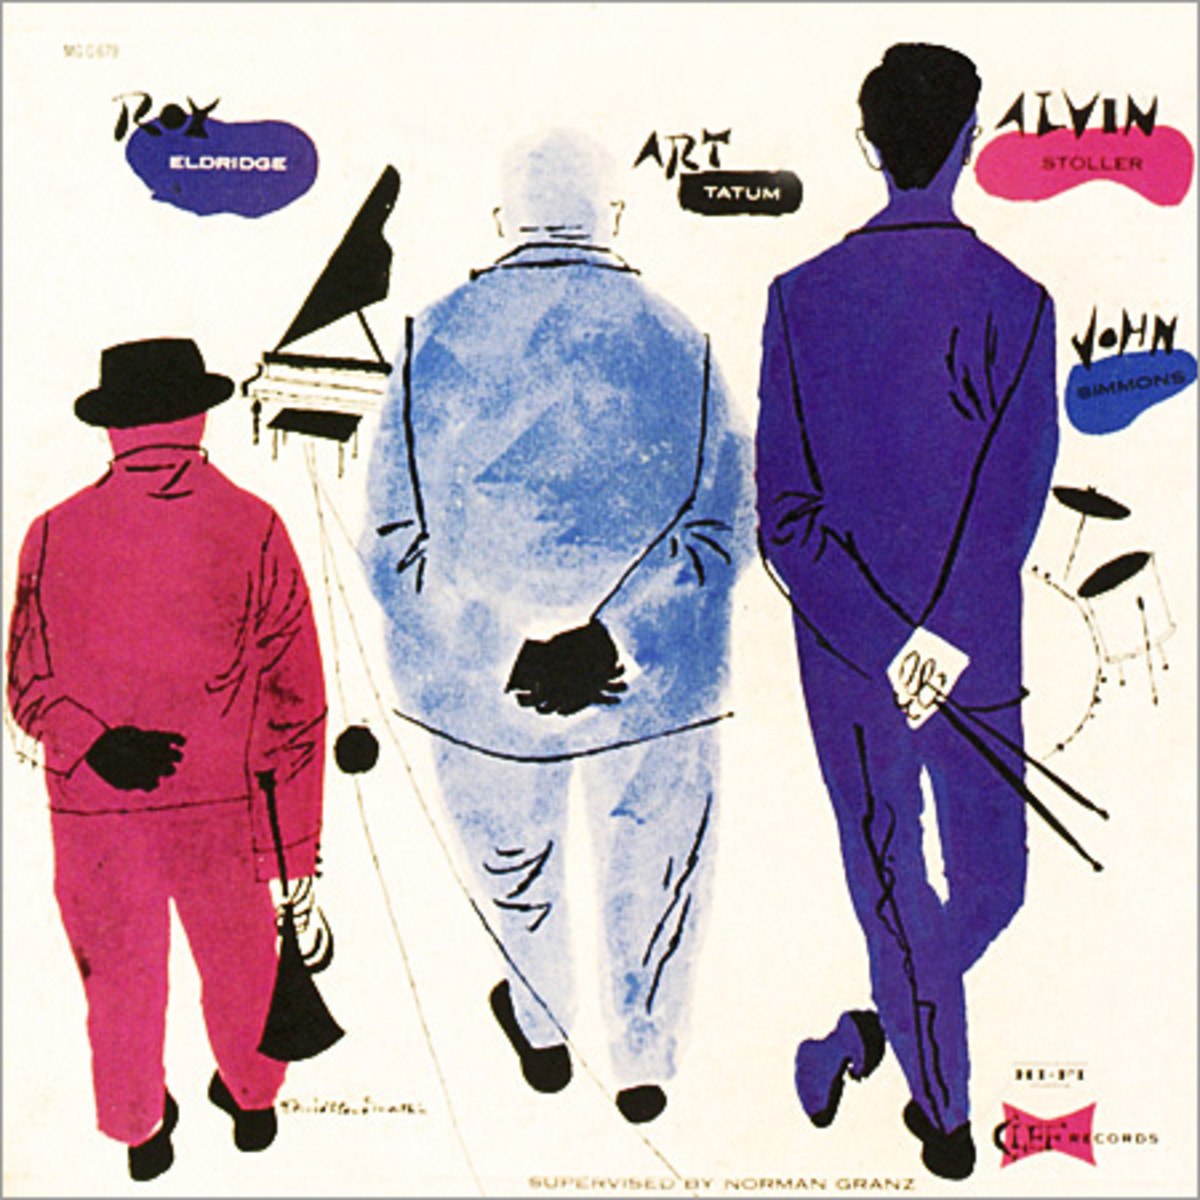 Roy Eldridge, Art Tatum, Clef  Records 679   12" LP Vinyl Record (1956). Album cover art by David Stone Martin.